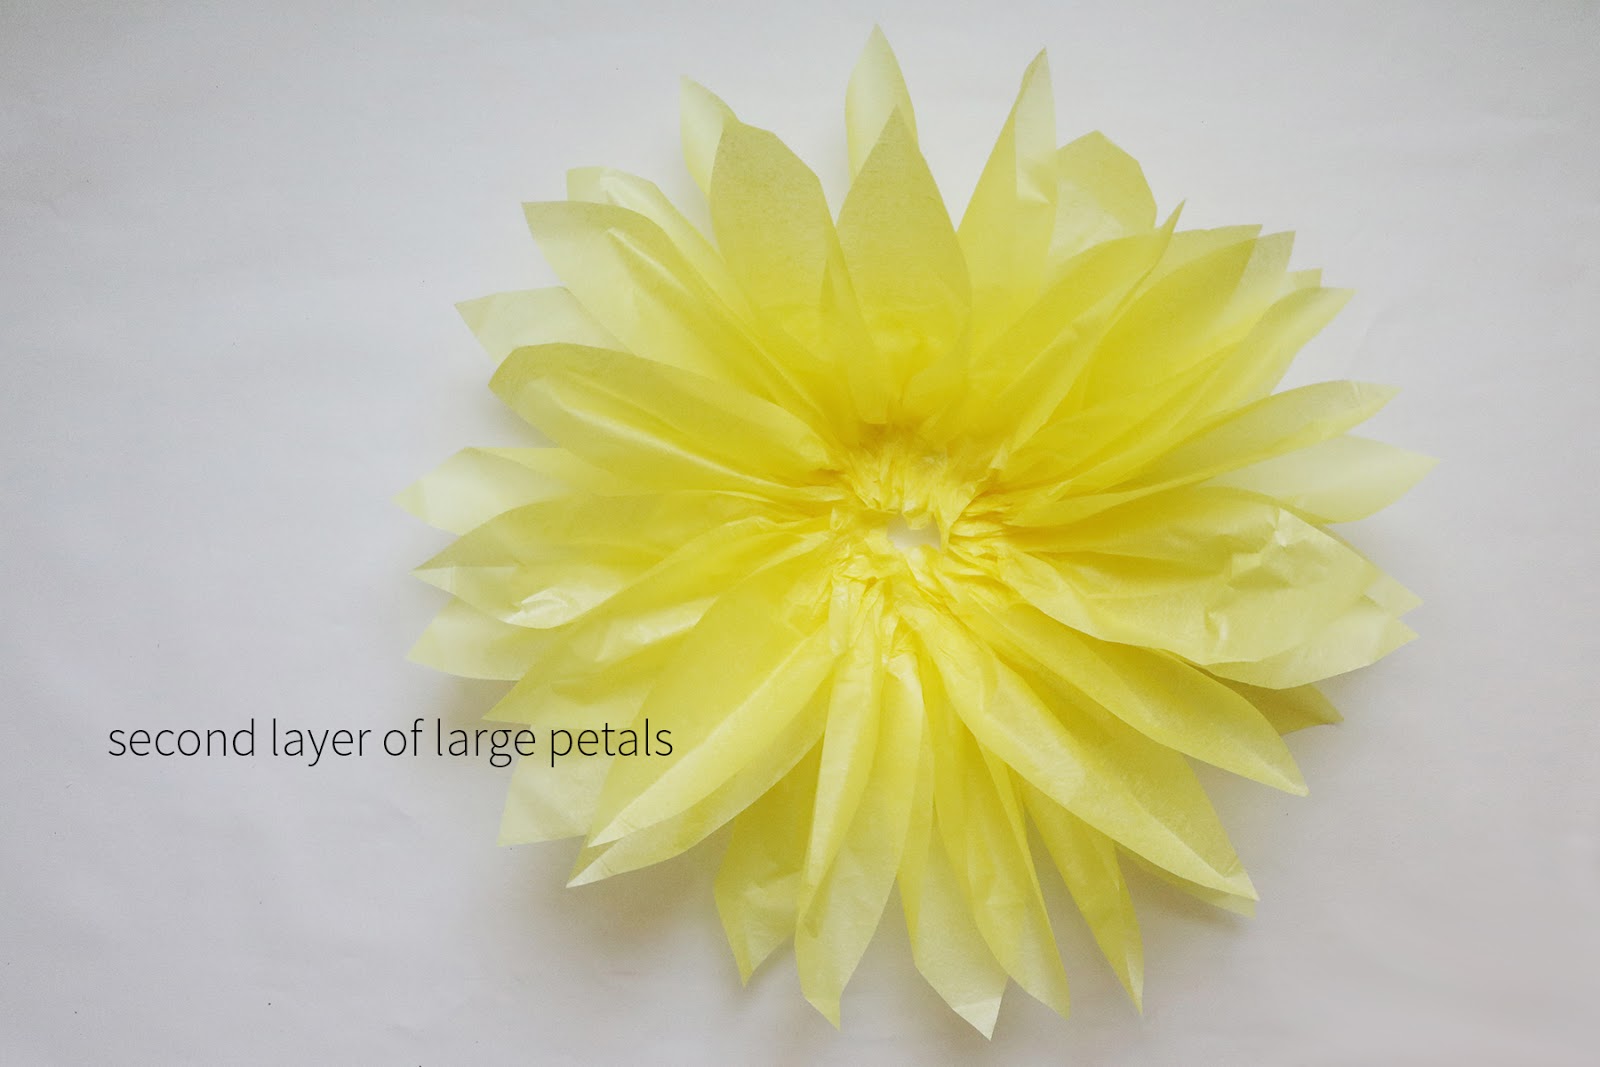 diy giant tissue paper flowers | Creative Bag